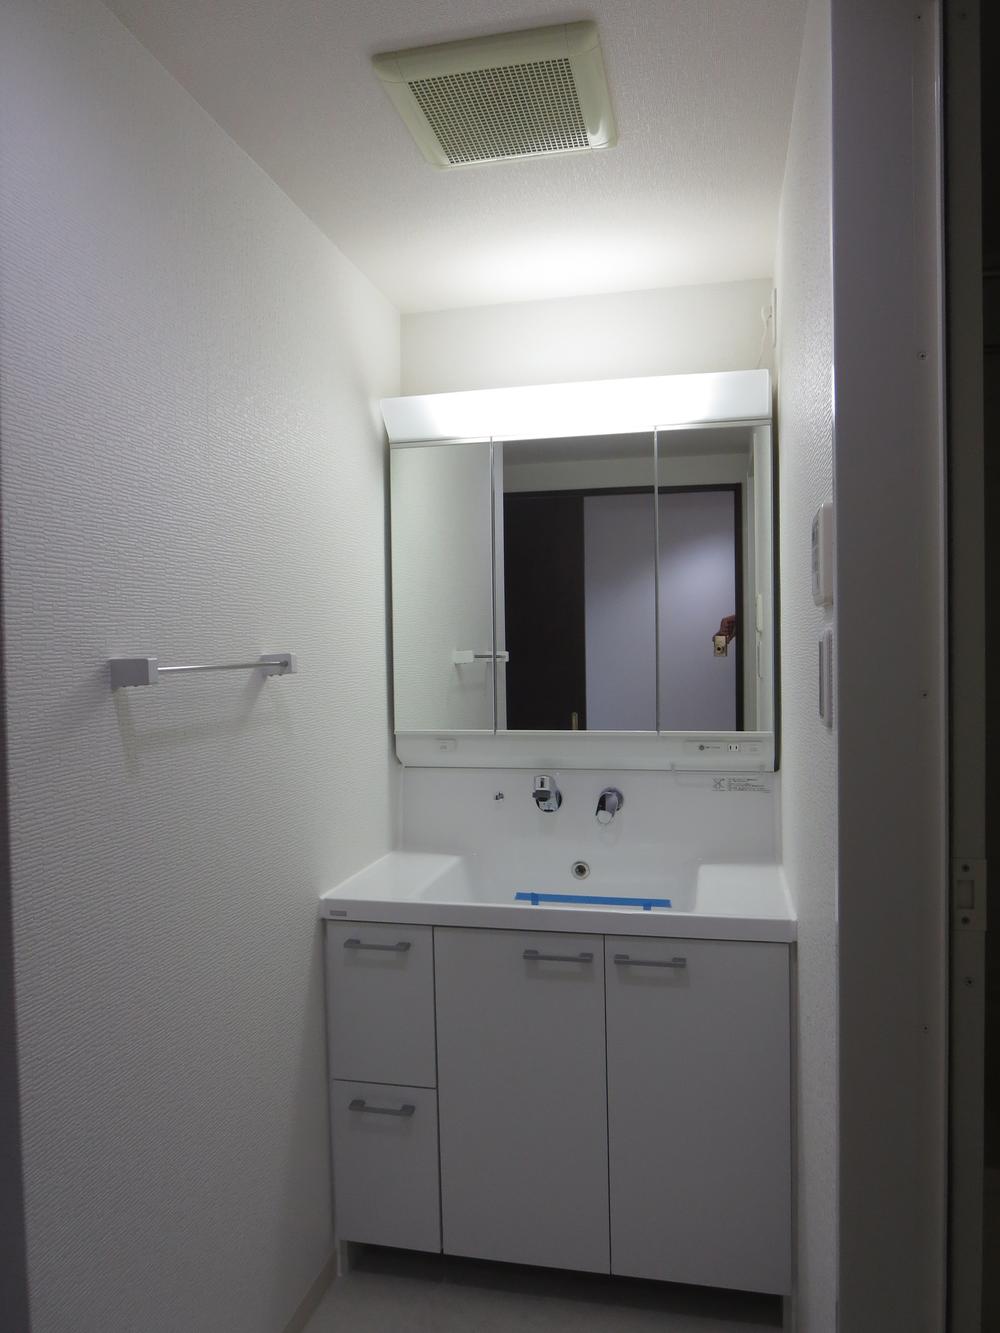 Wash basin, toilet. Wash basin of three-sided mirror